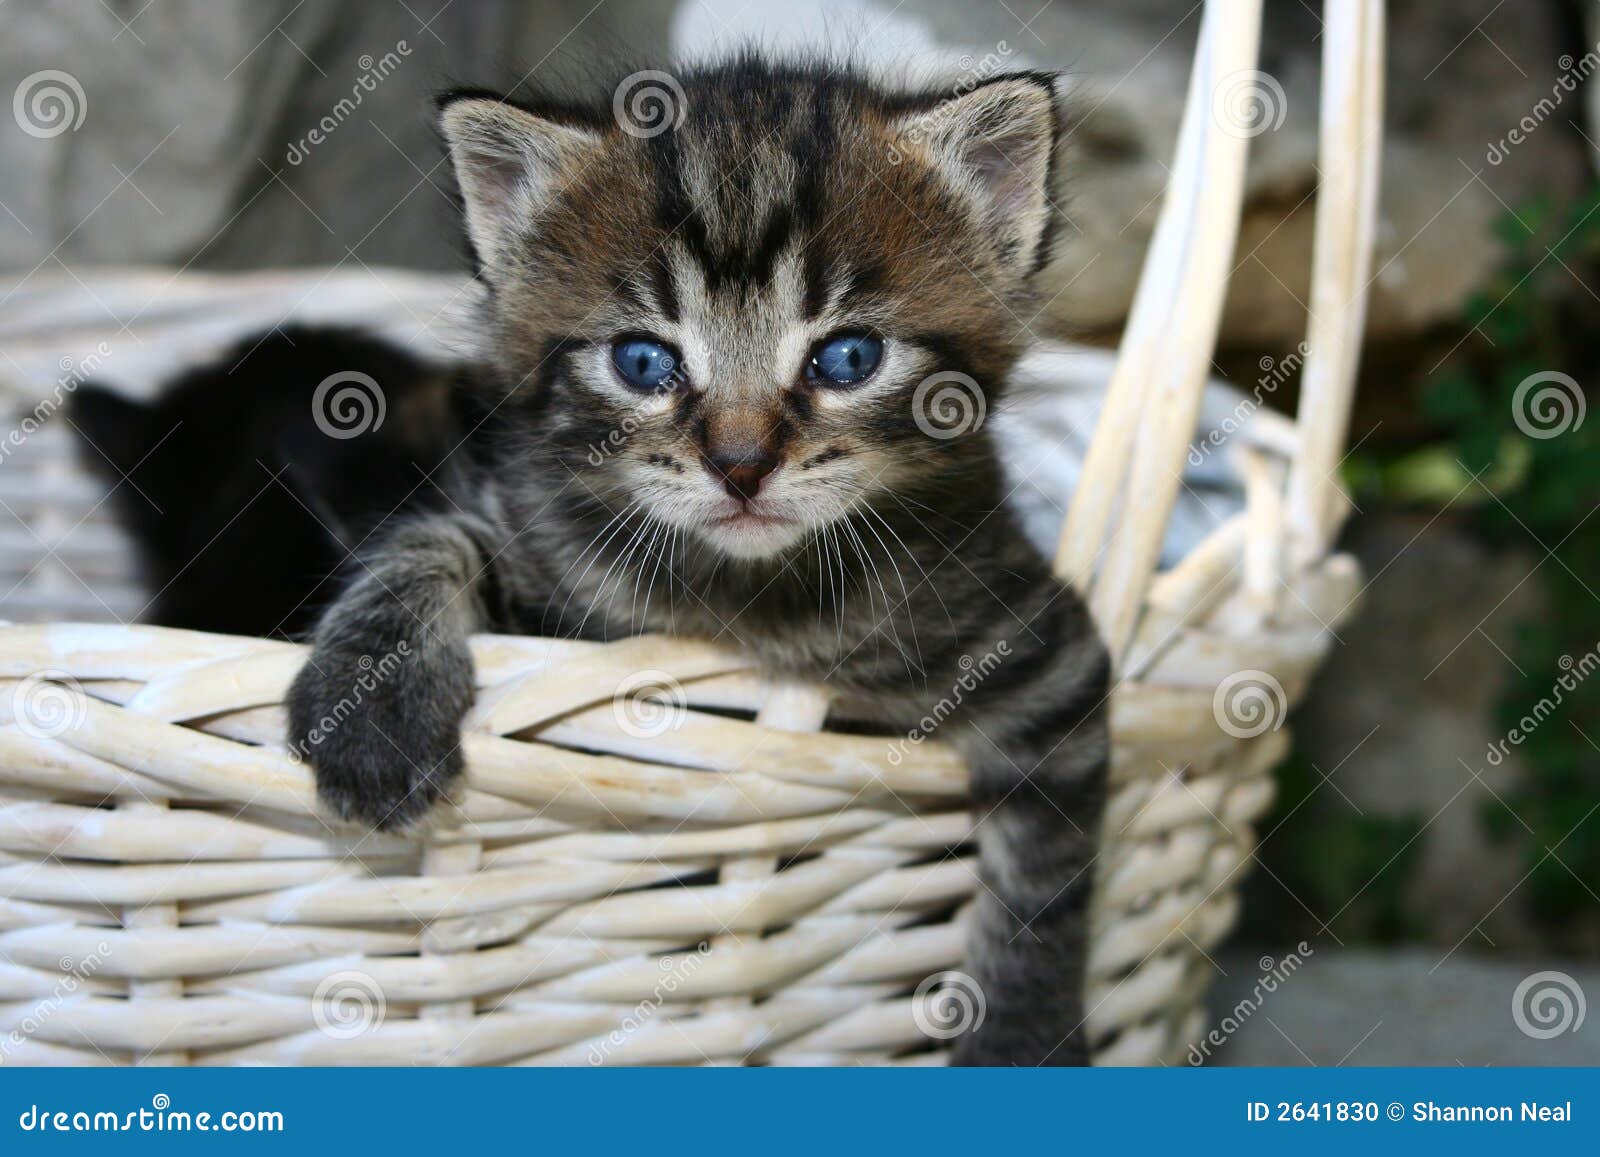 cute spring kitty